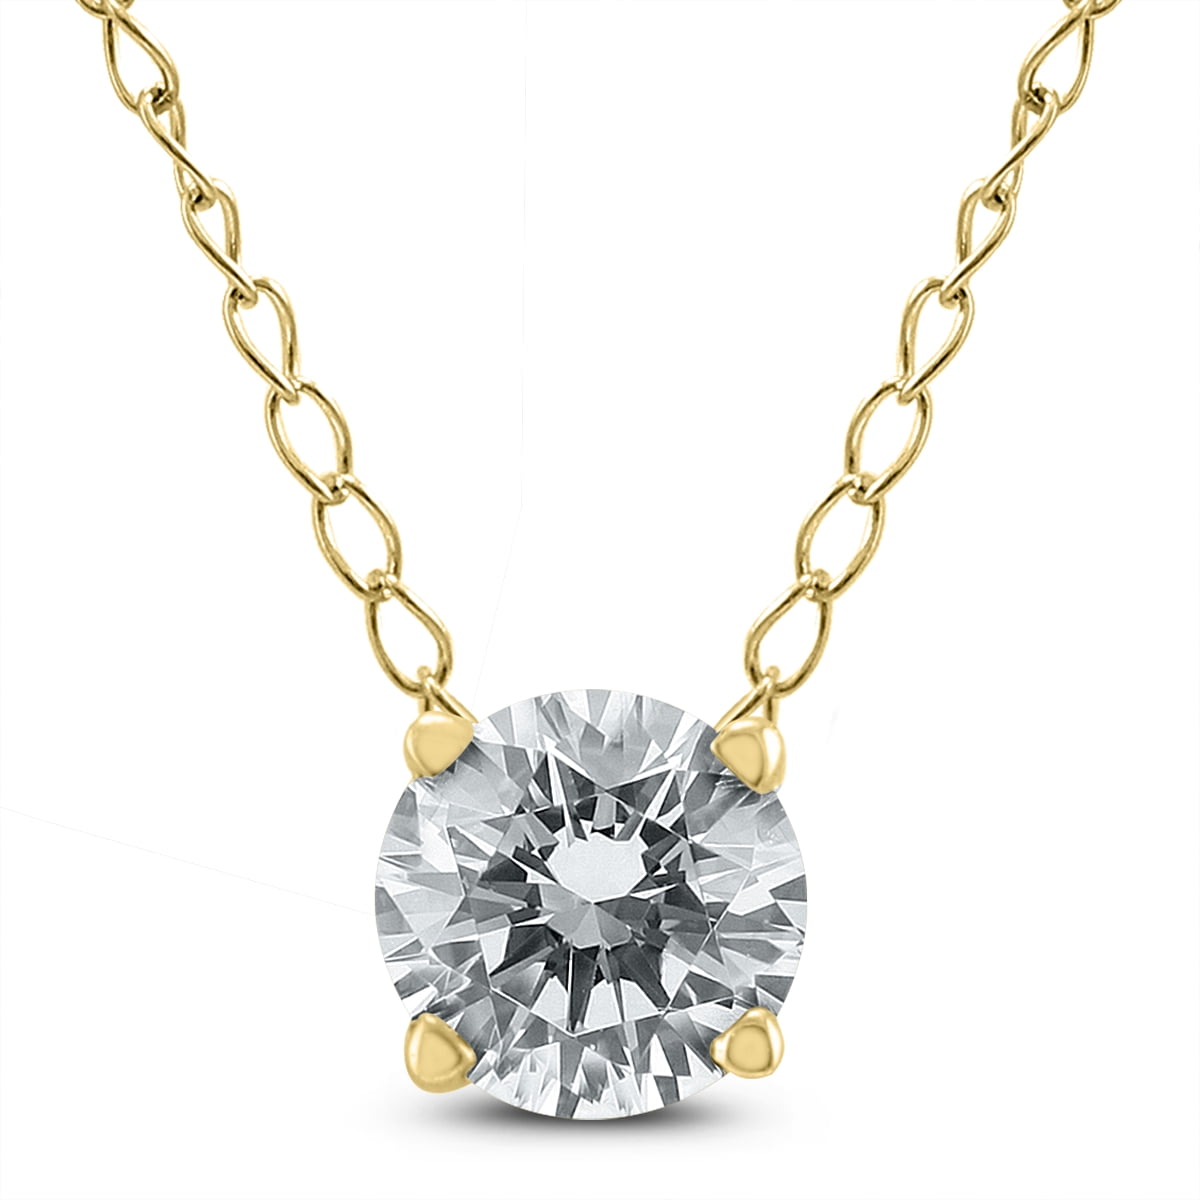 Szul Jewelry Ags Certified 34 Carat Floating Round Diamond Solitaire